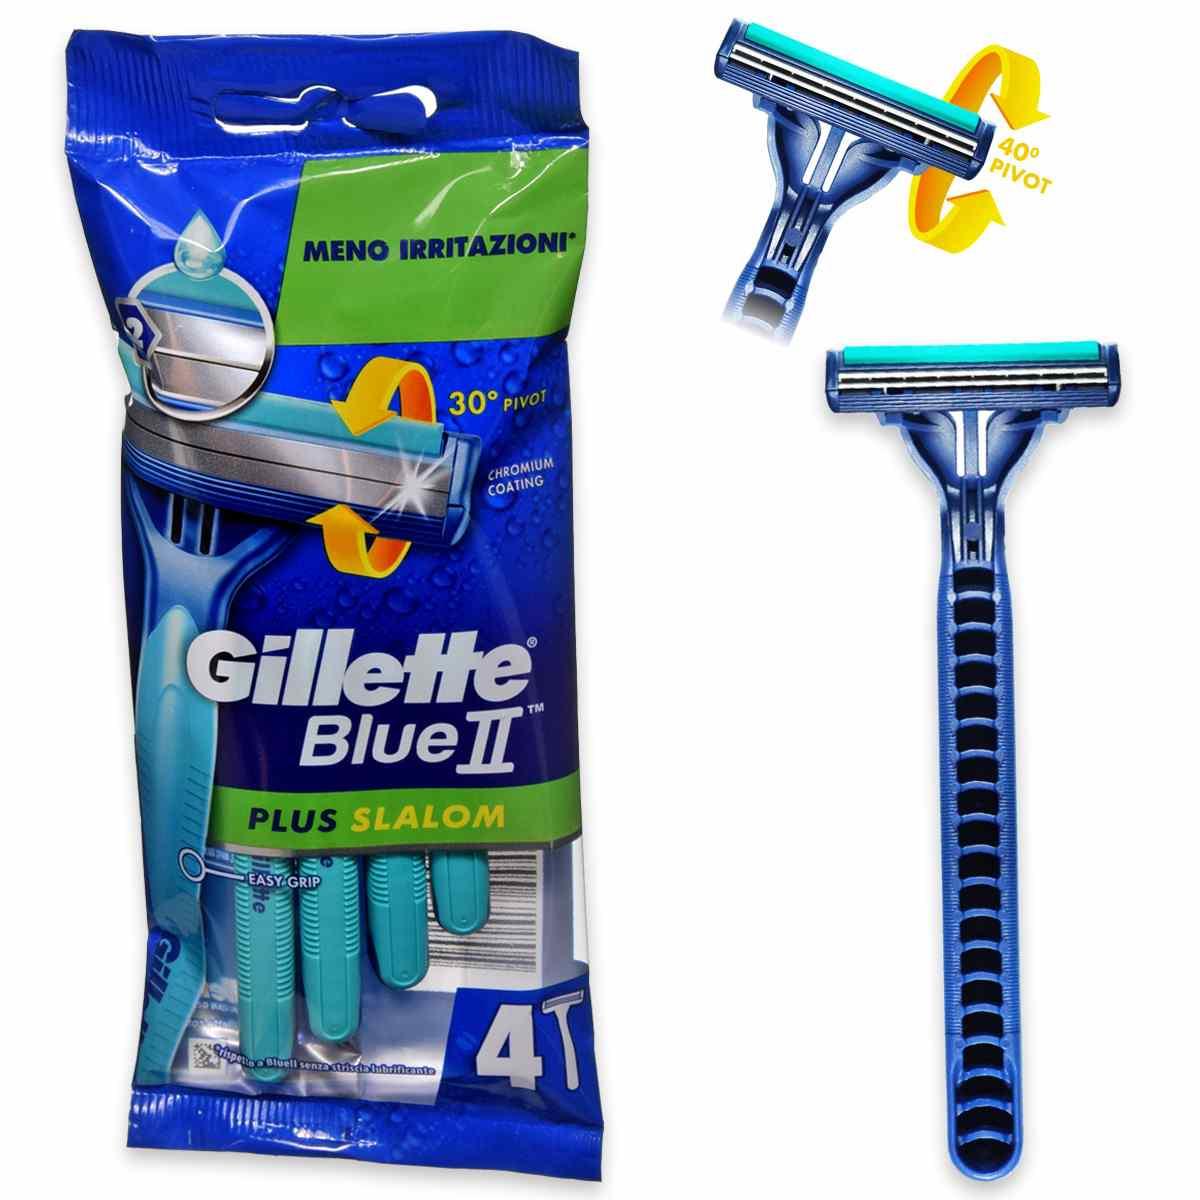 Gillette blue ii plus slalom 4 pz